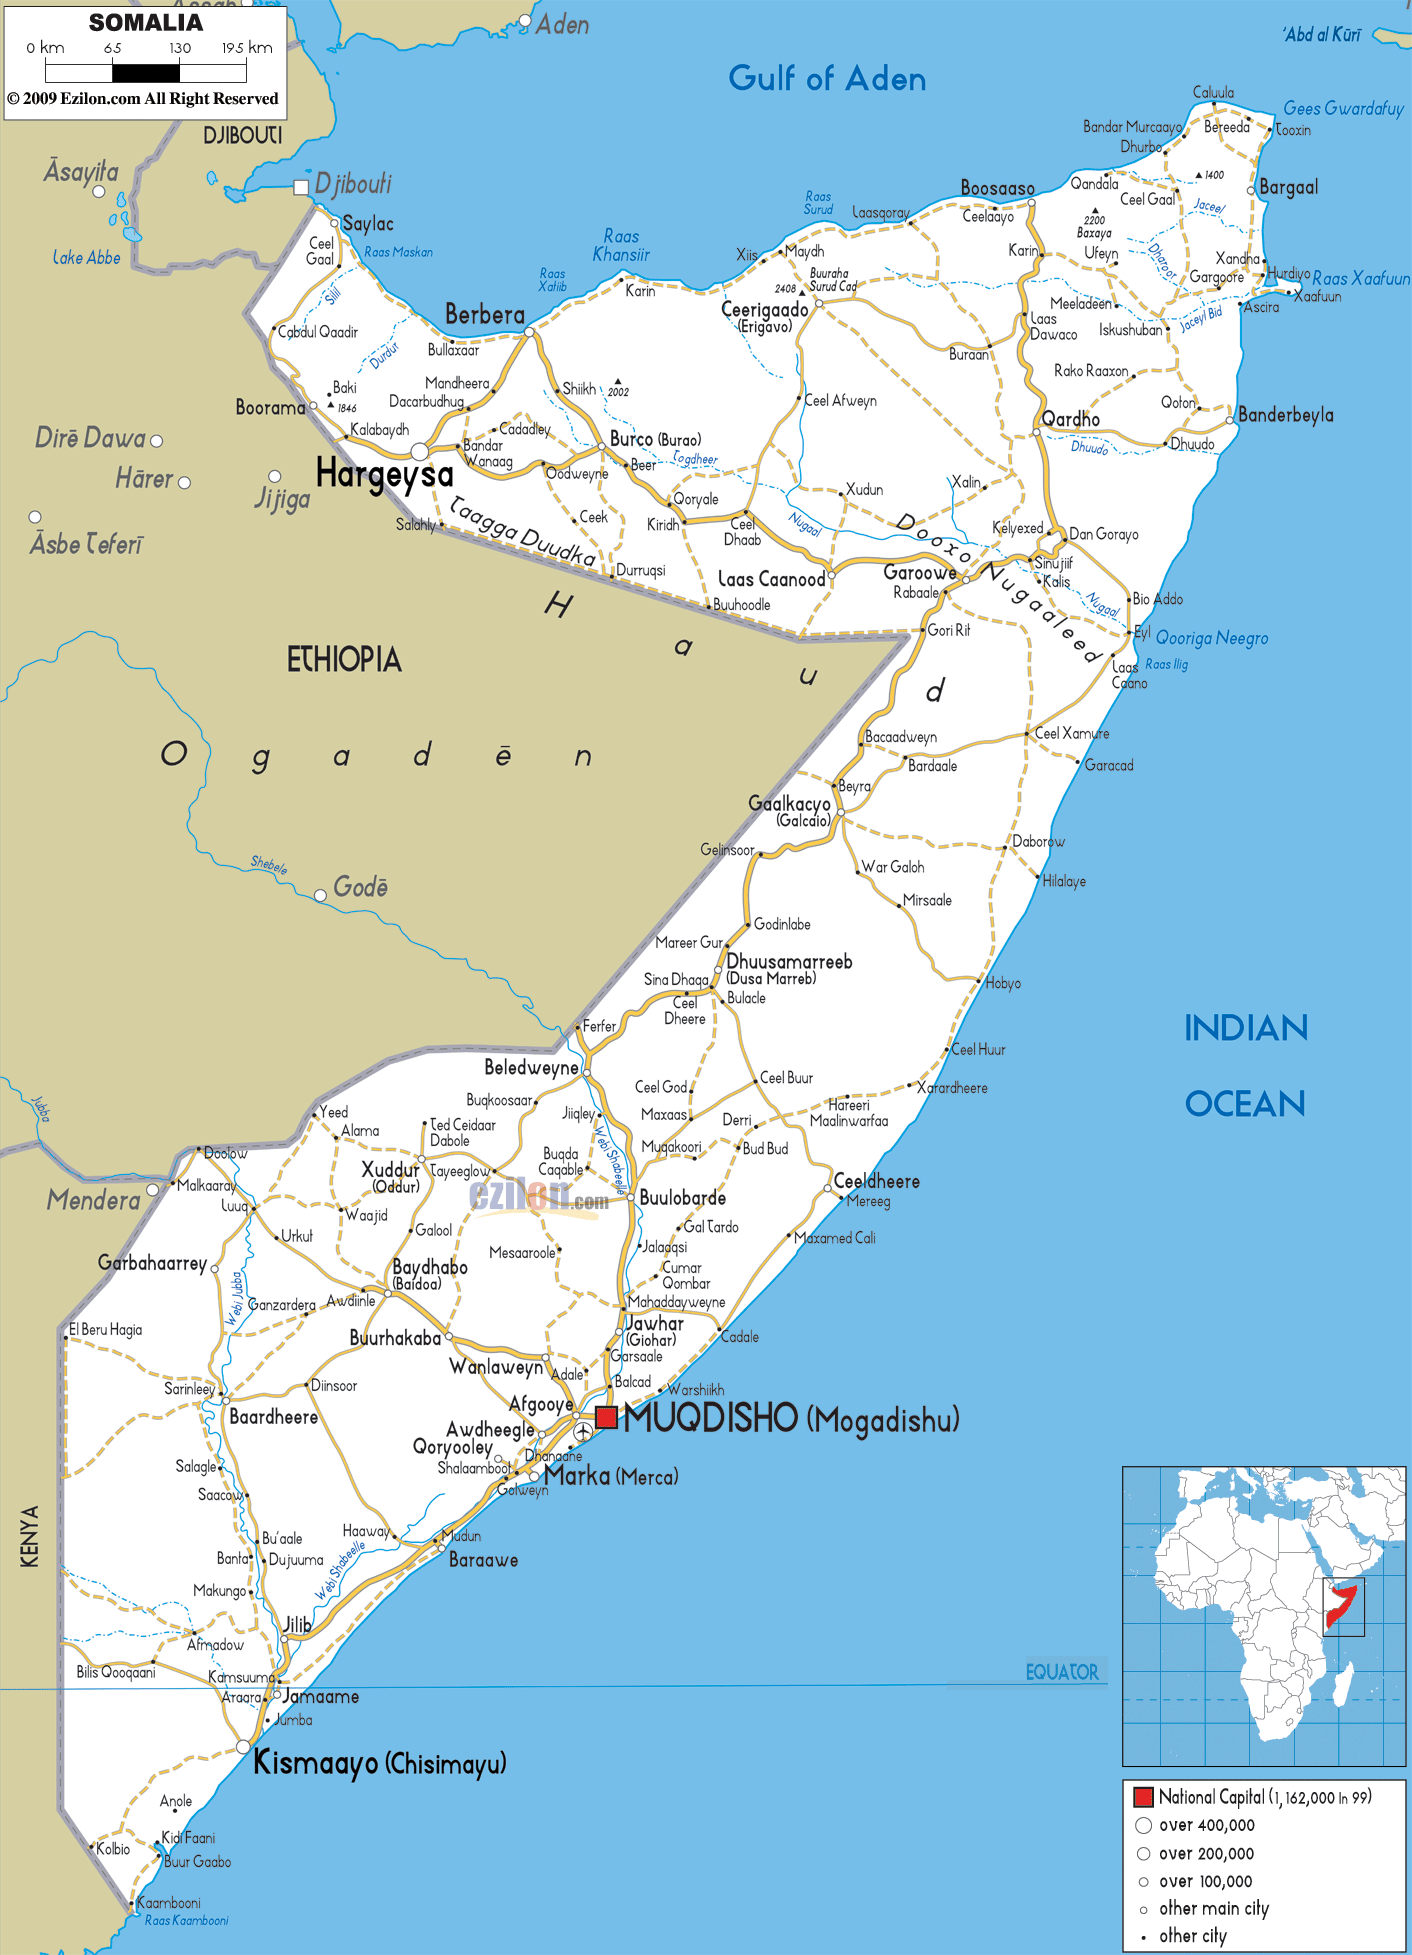 Road Map of Somalia - Ezilon Maps